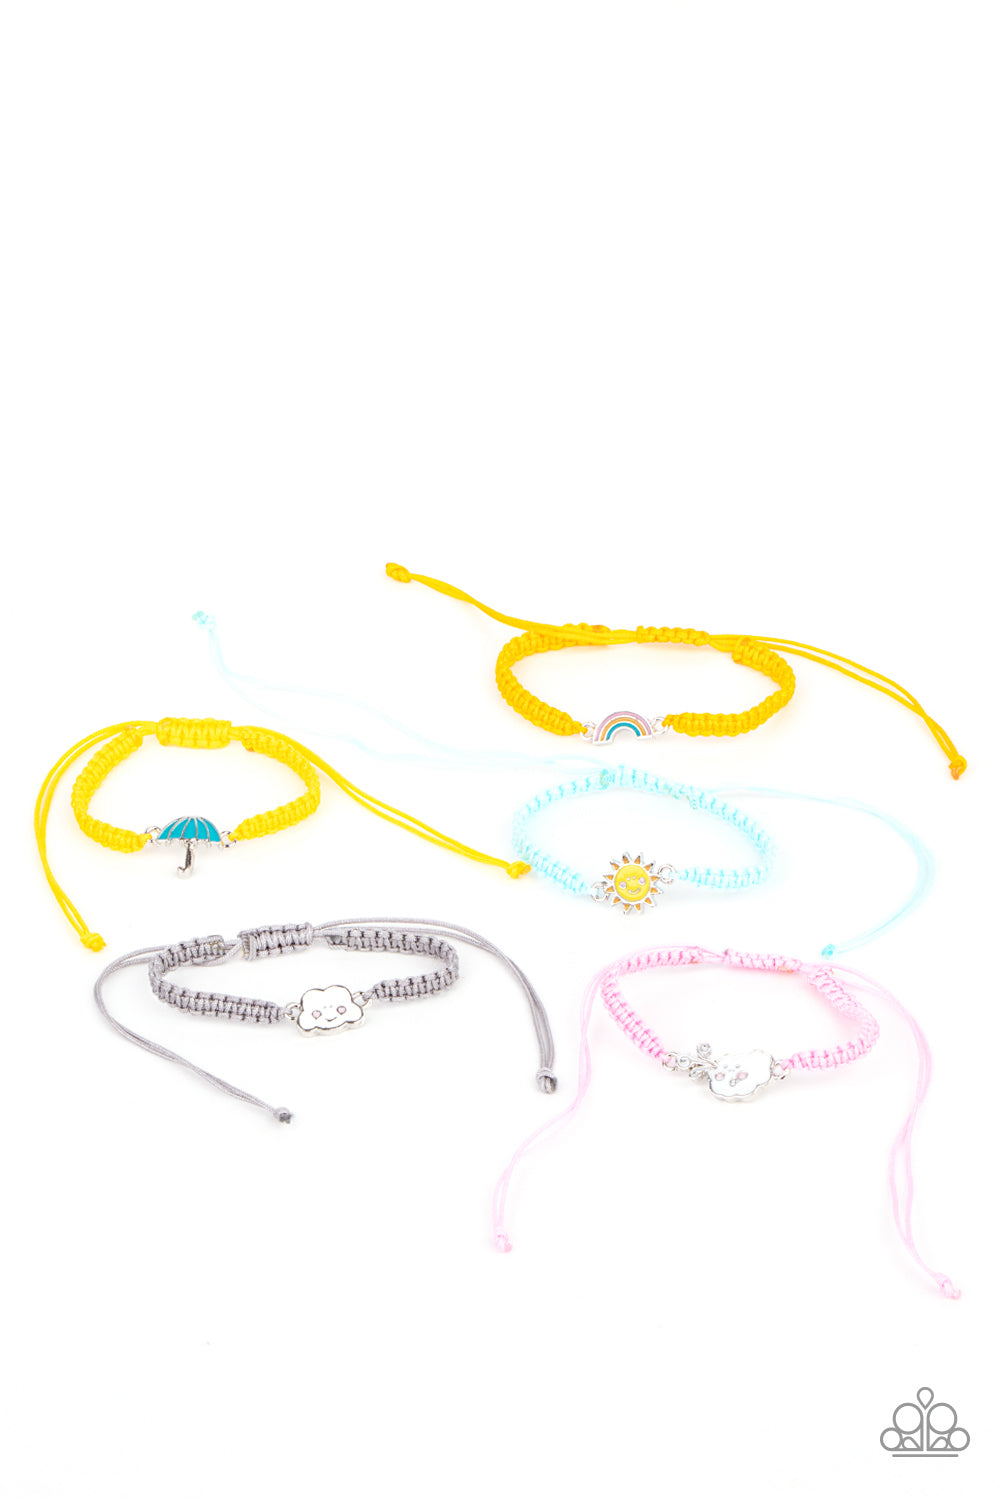 Paparazzi Starlet Shimmer Kids bracelet. Cloud Charms bracelet (#P9SS-MTXX-293XX). Umbrella charm